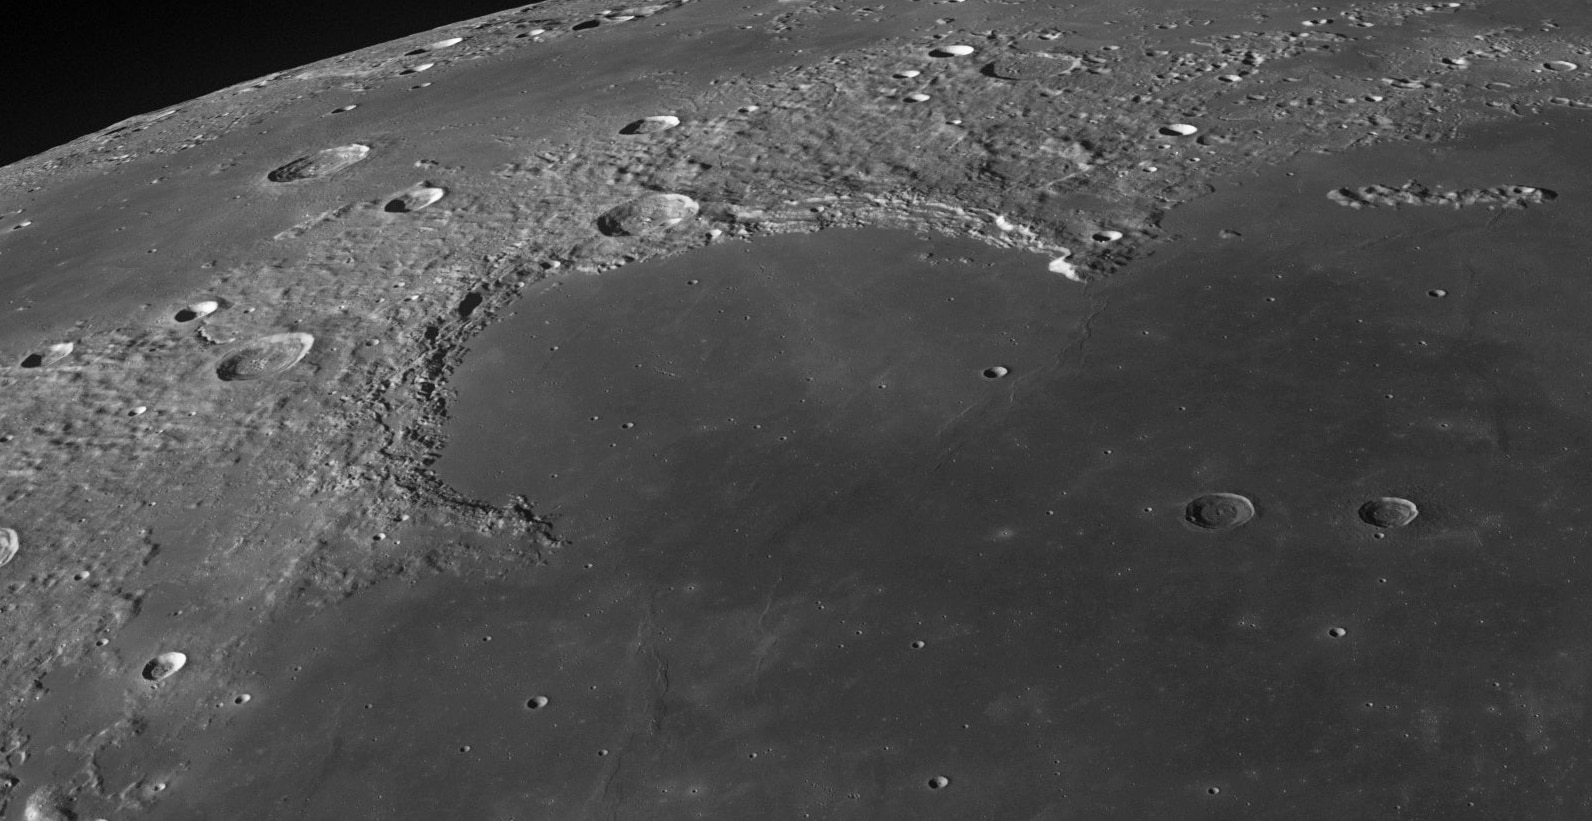 Sinus Iridum, a huge impact feature on the Moon. Credit: NASA/GSFC/Arizona State University / Seán Doran